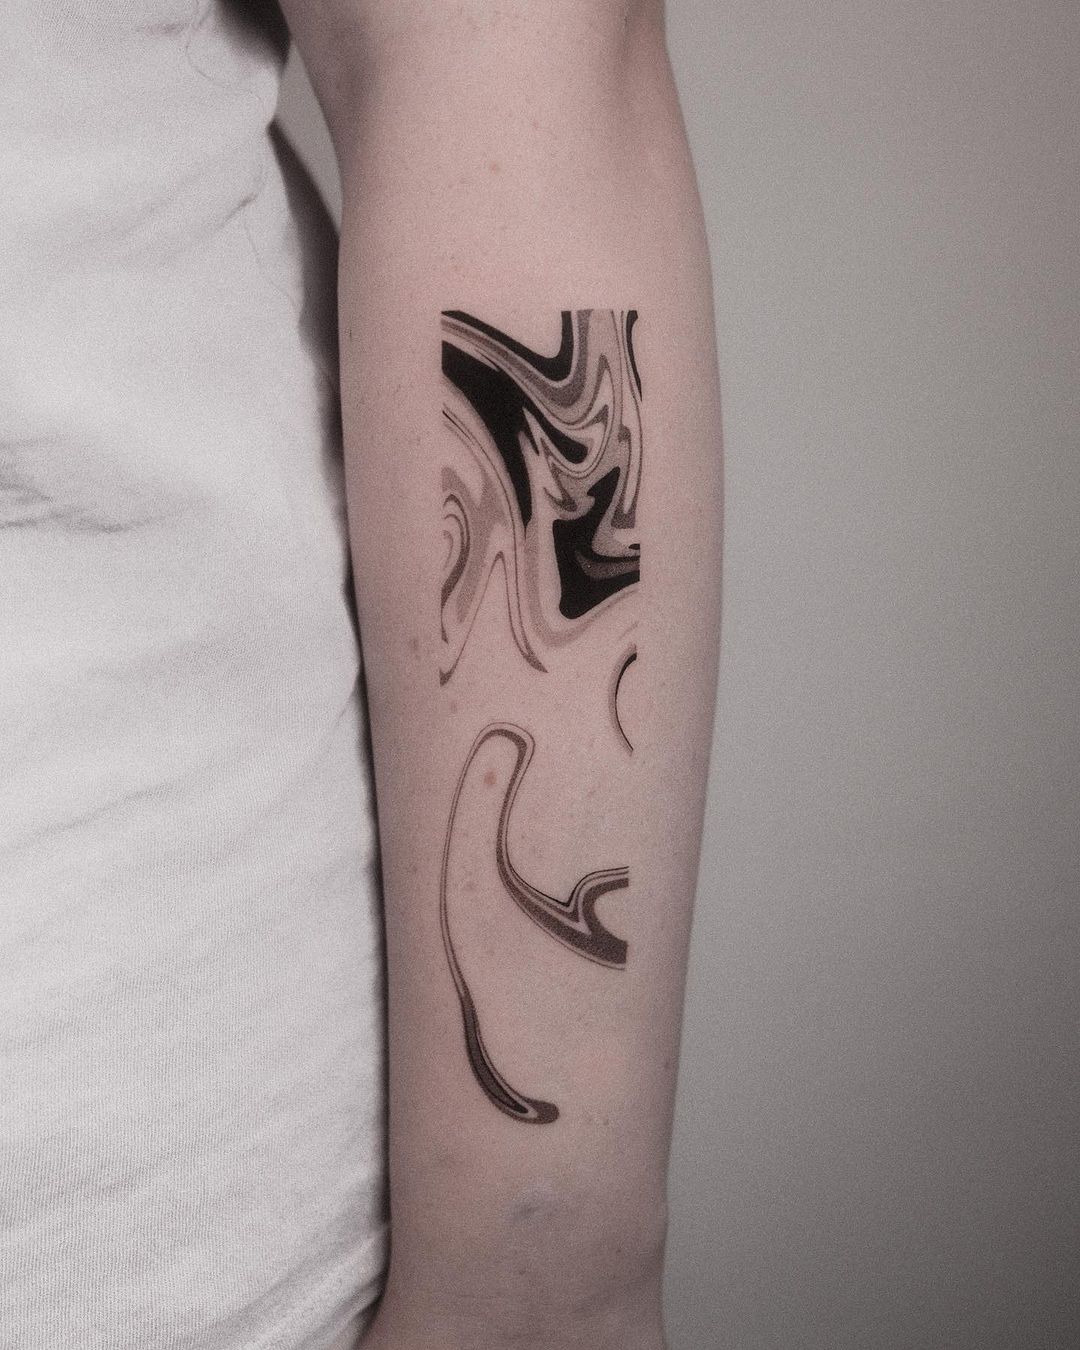 Abstrcat tattoo designs by fifne